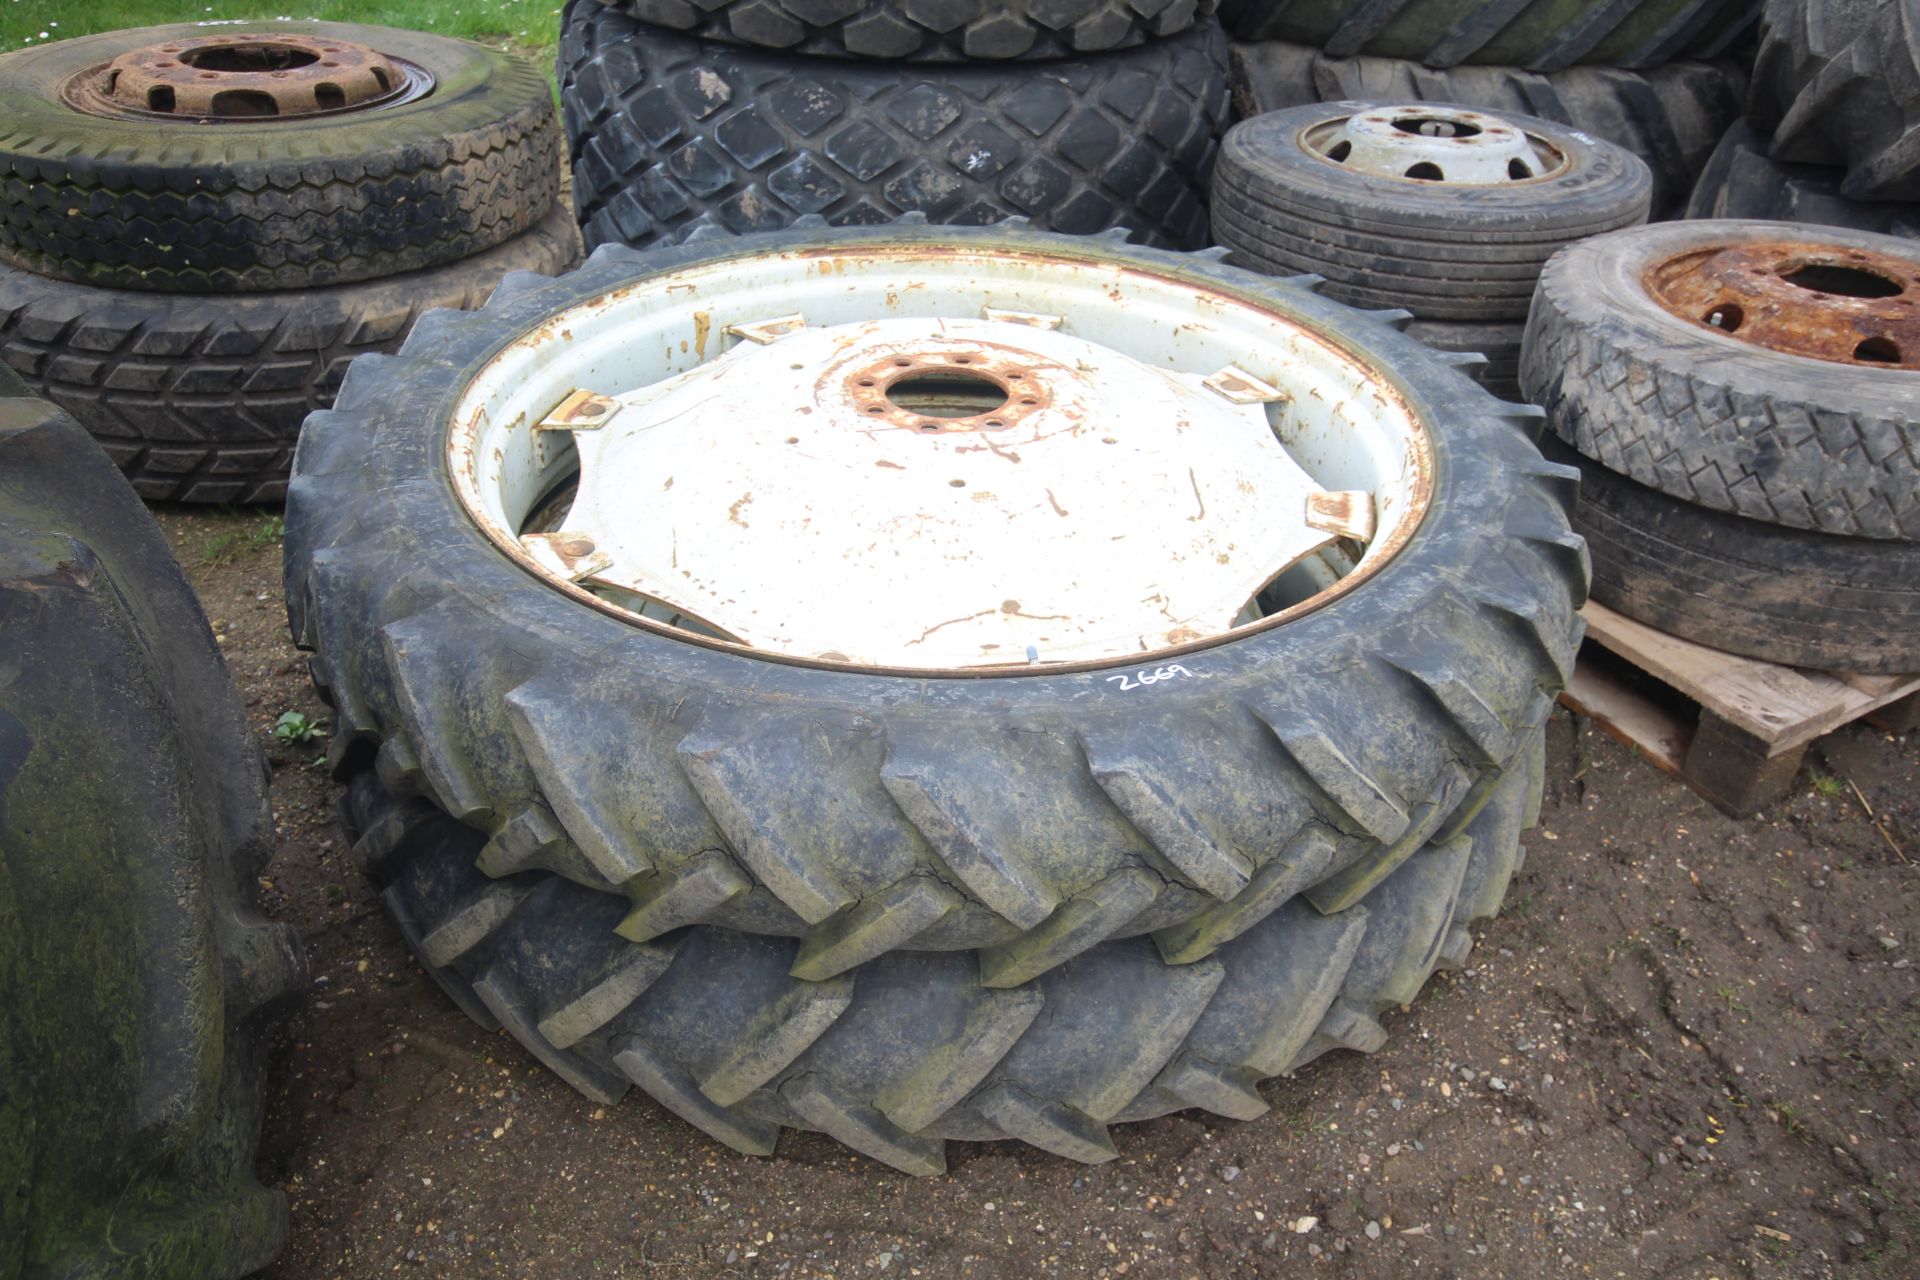 John Deere 9.5x44 rowcrop wheels and tyres. V